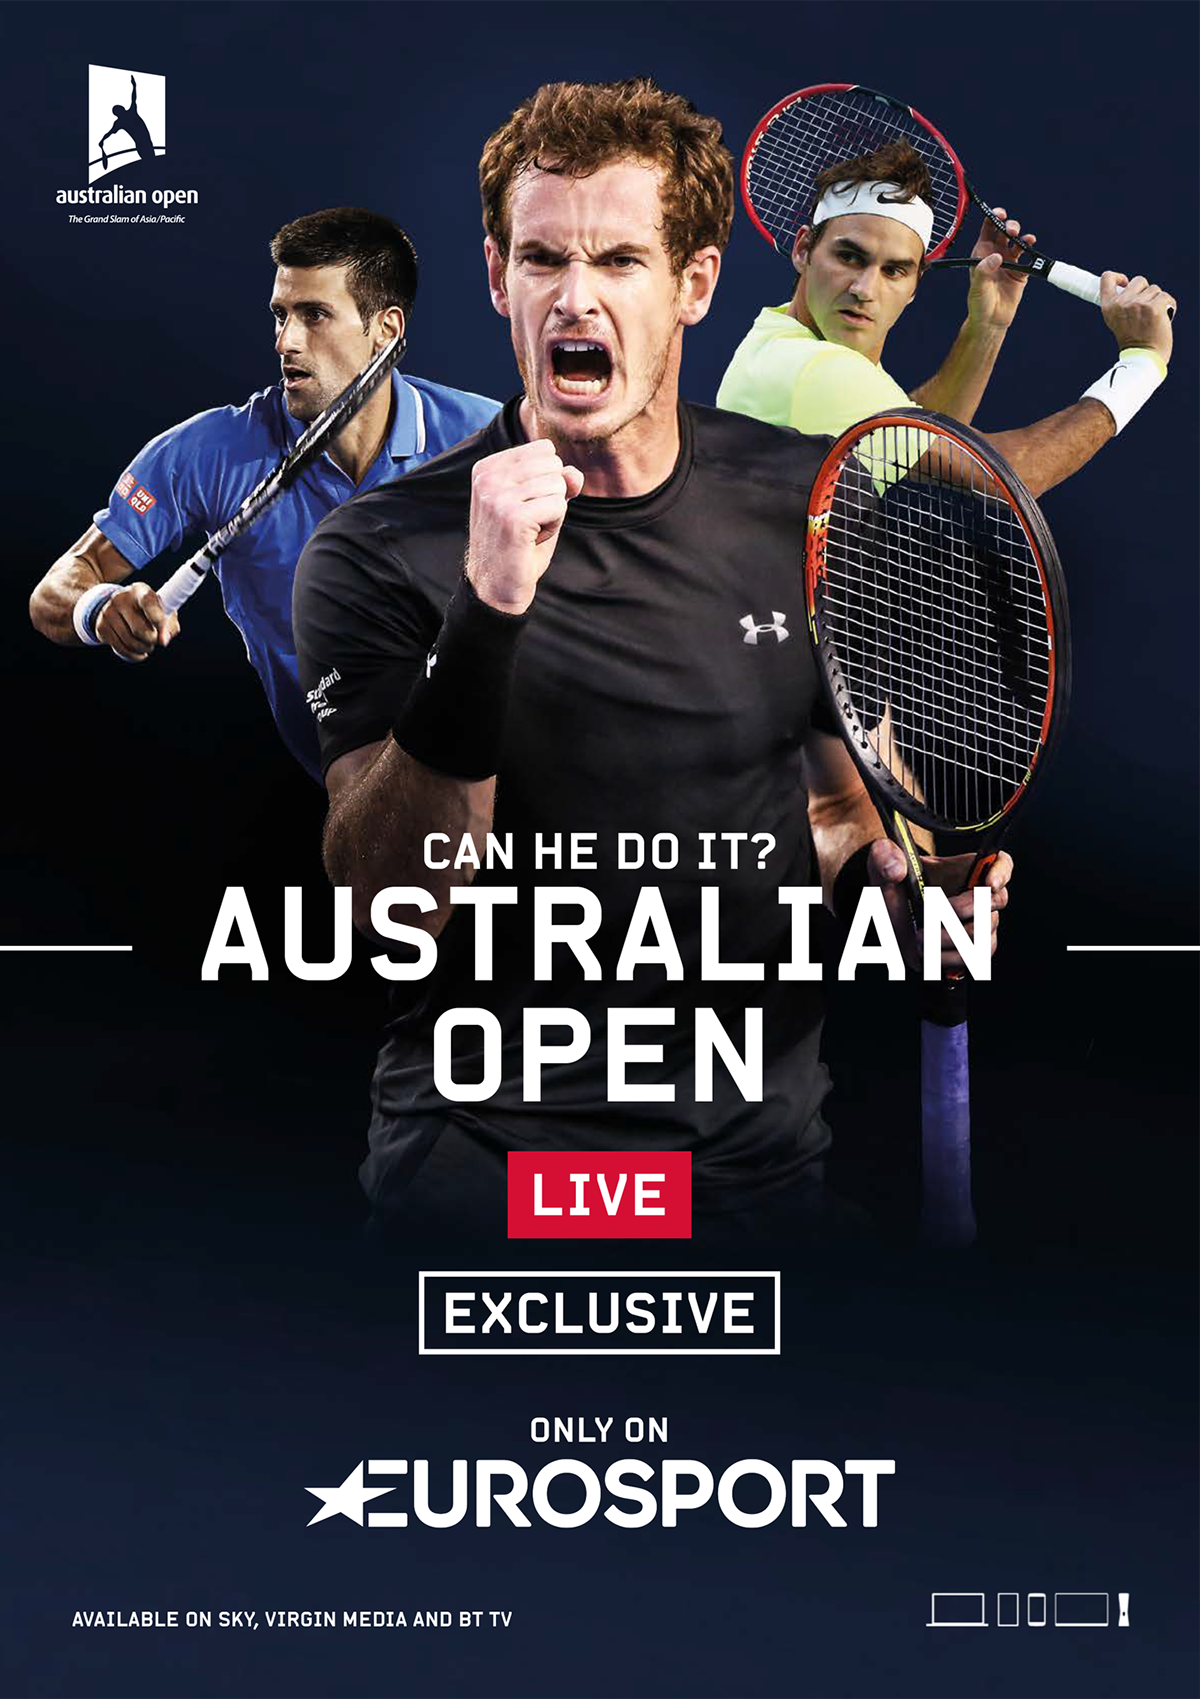 Eurosport Australian Open 2016 Behance